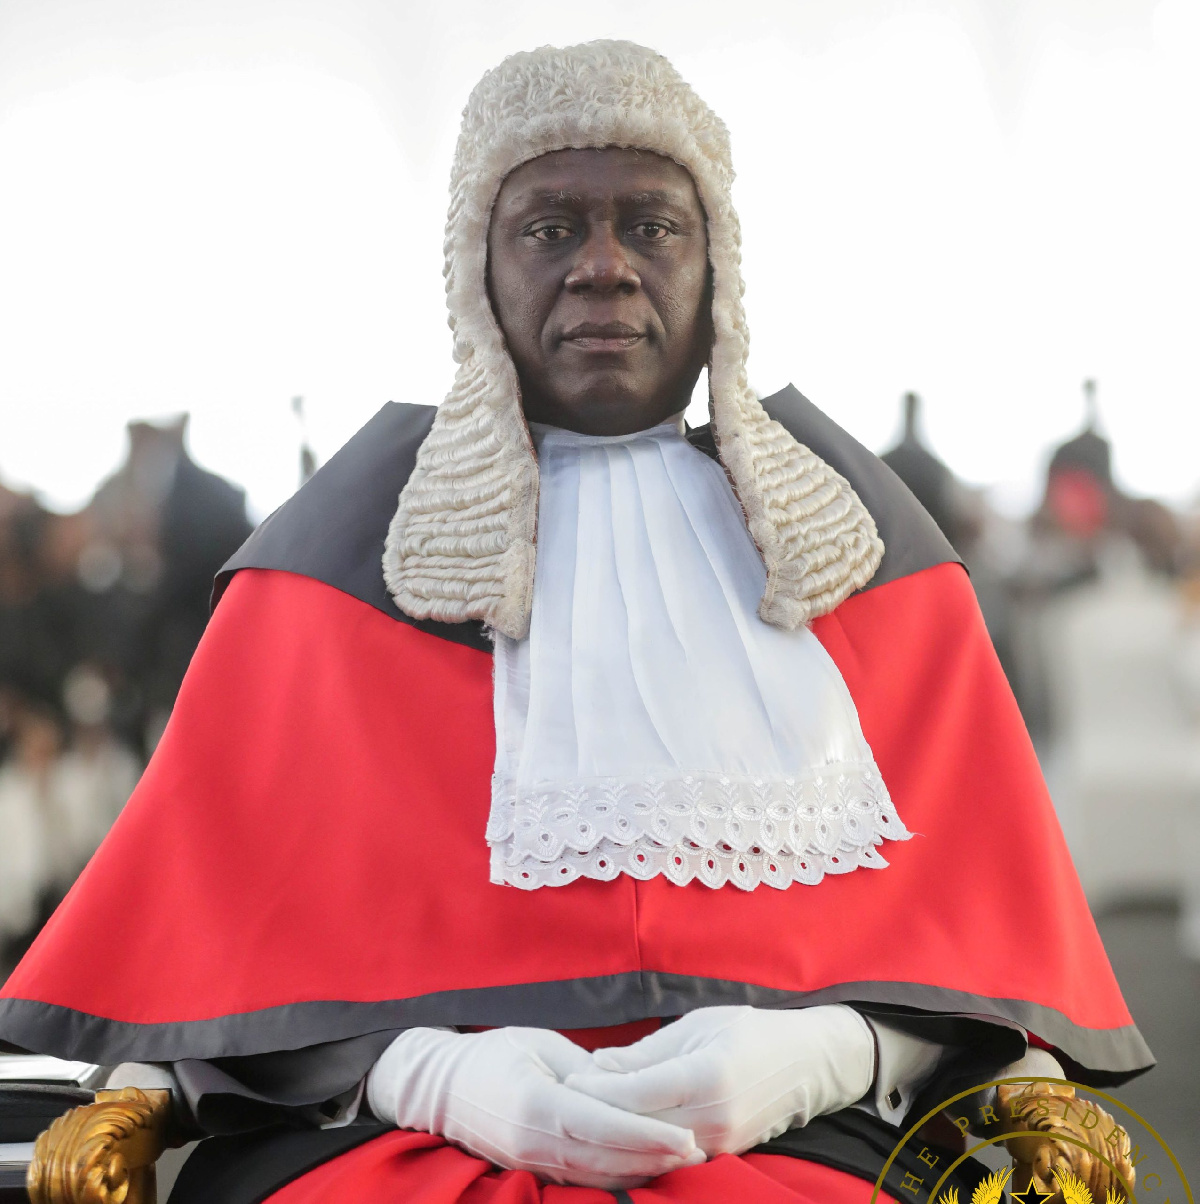 Chief Justice, Anin Yeboah